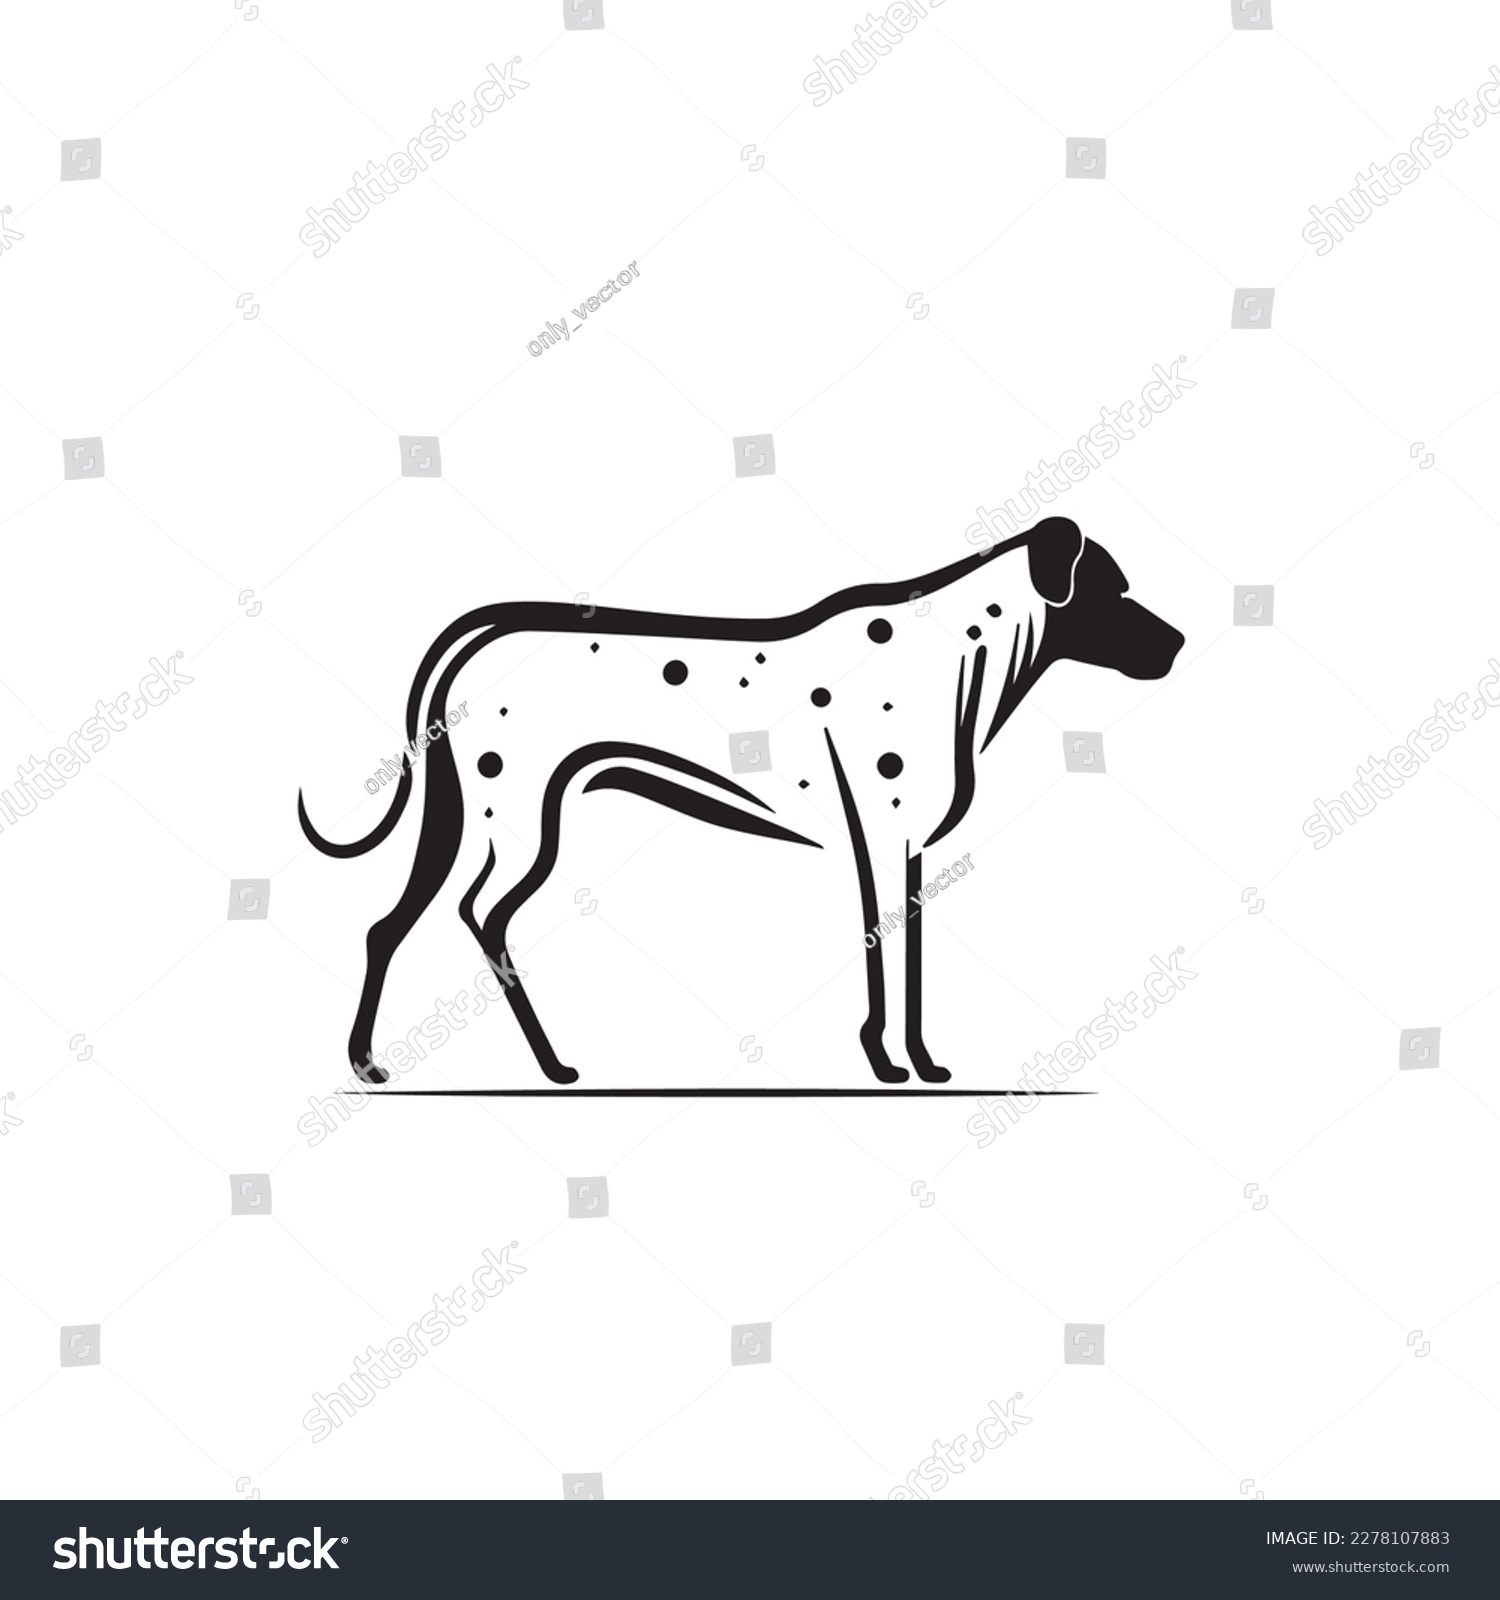 SVG of Dalmatian dog simple vector black image on white background. Silhouette svg vector illustration animal, laser cutting cnc. svg